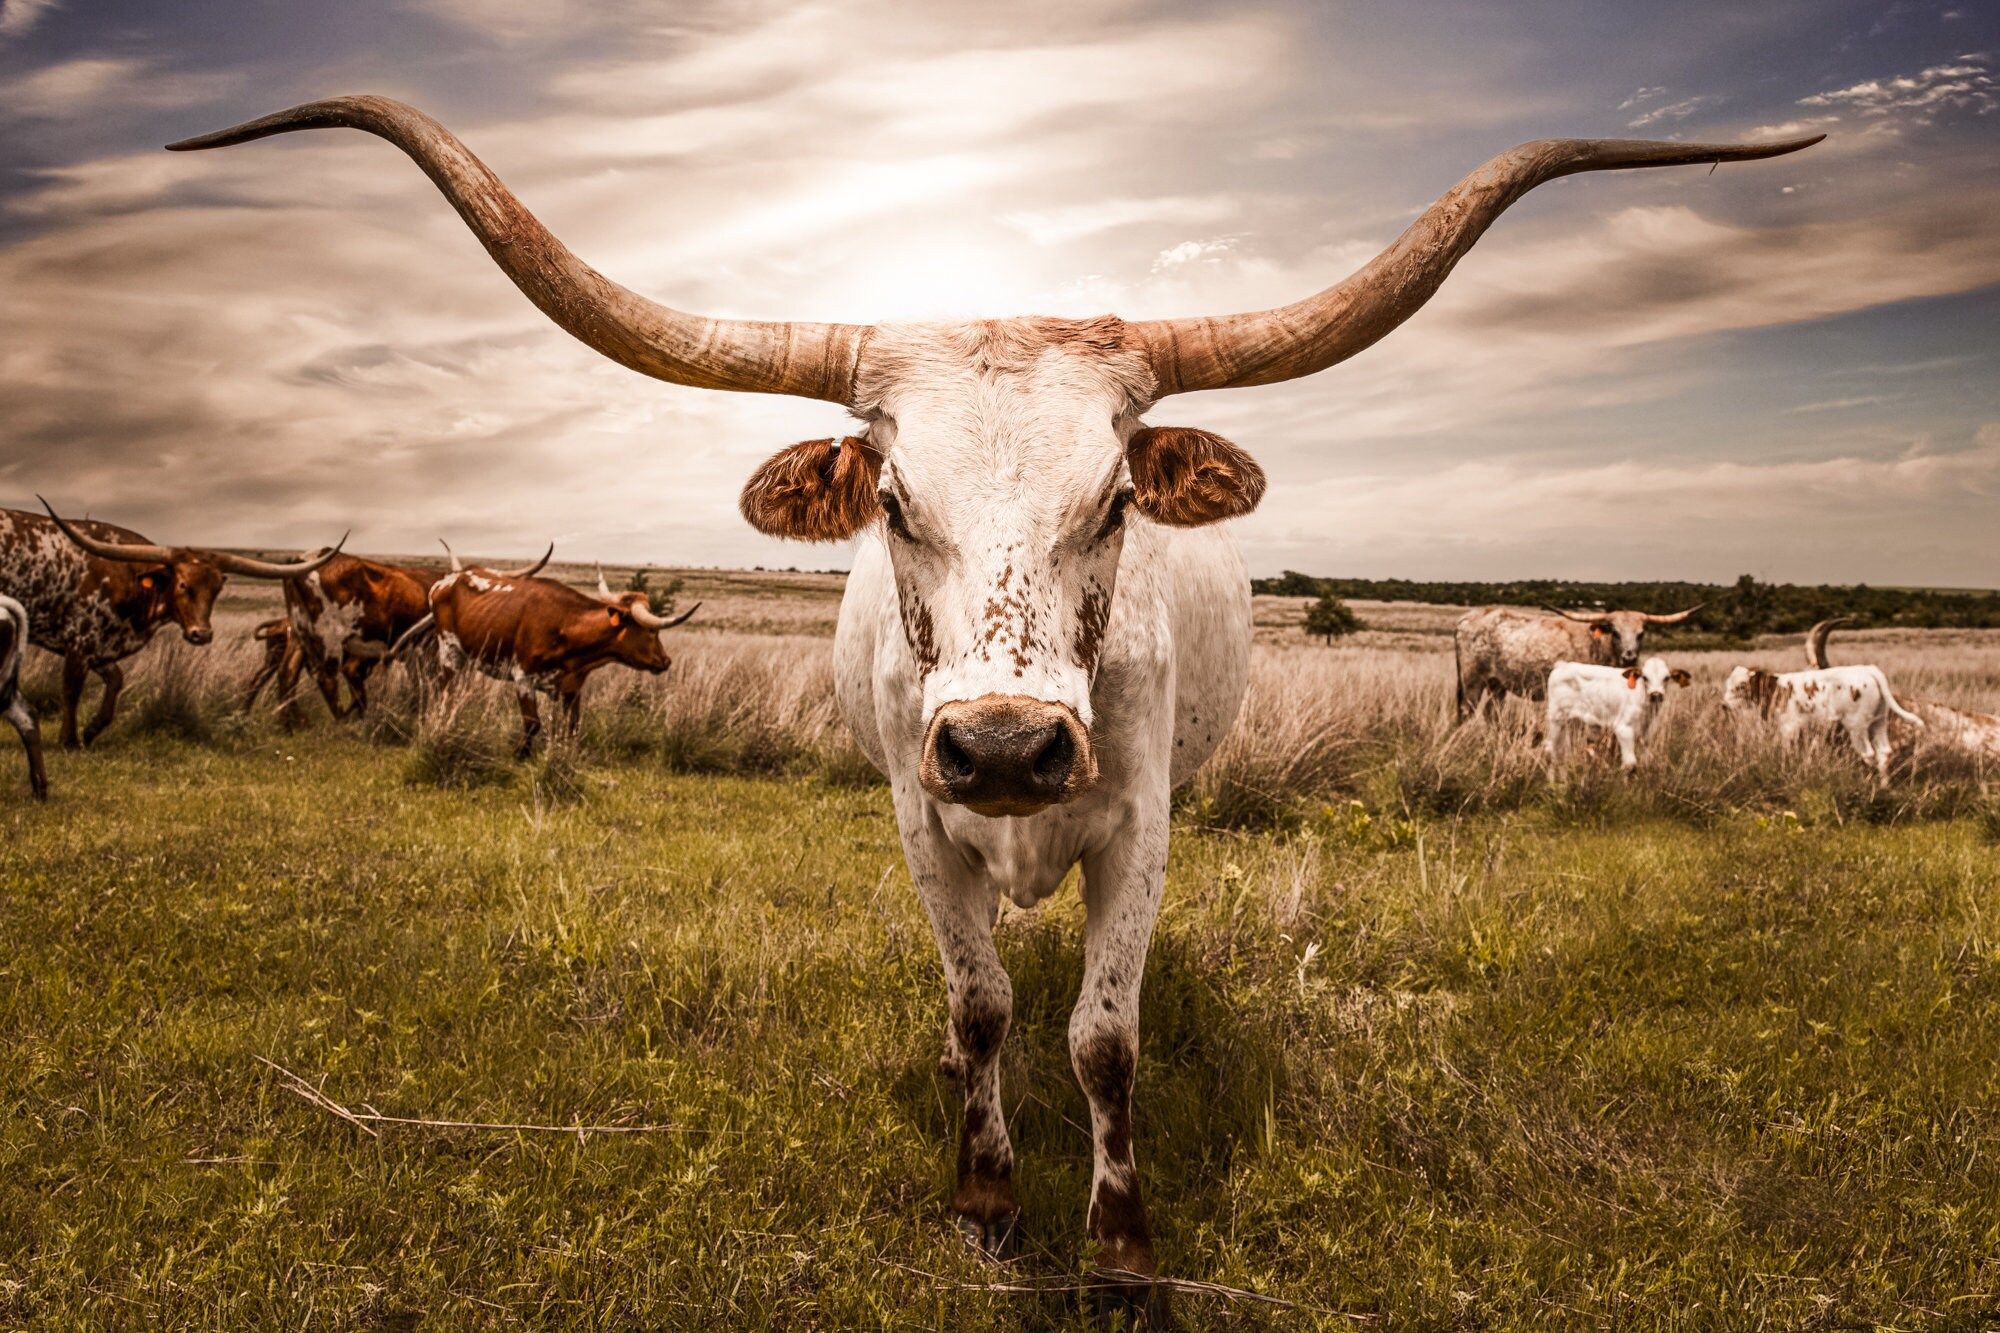 Longhorn cattle in a field in the Texas countryside - Longhorn